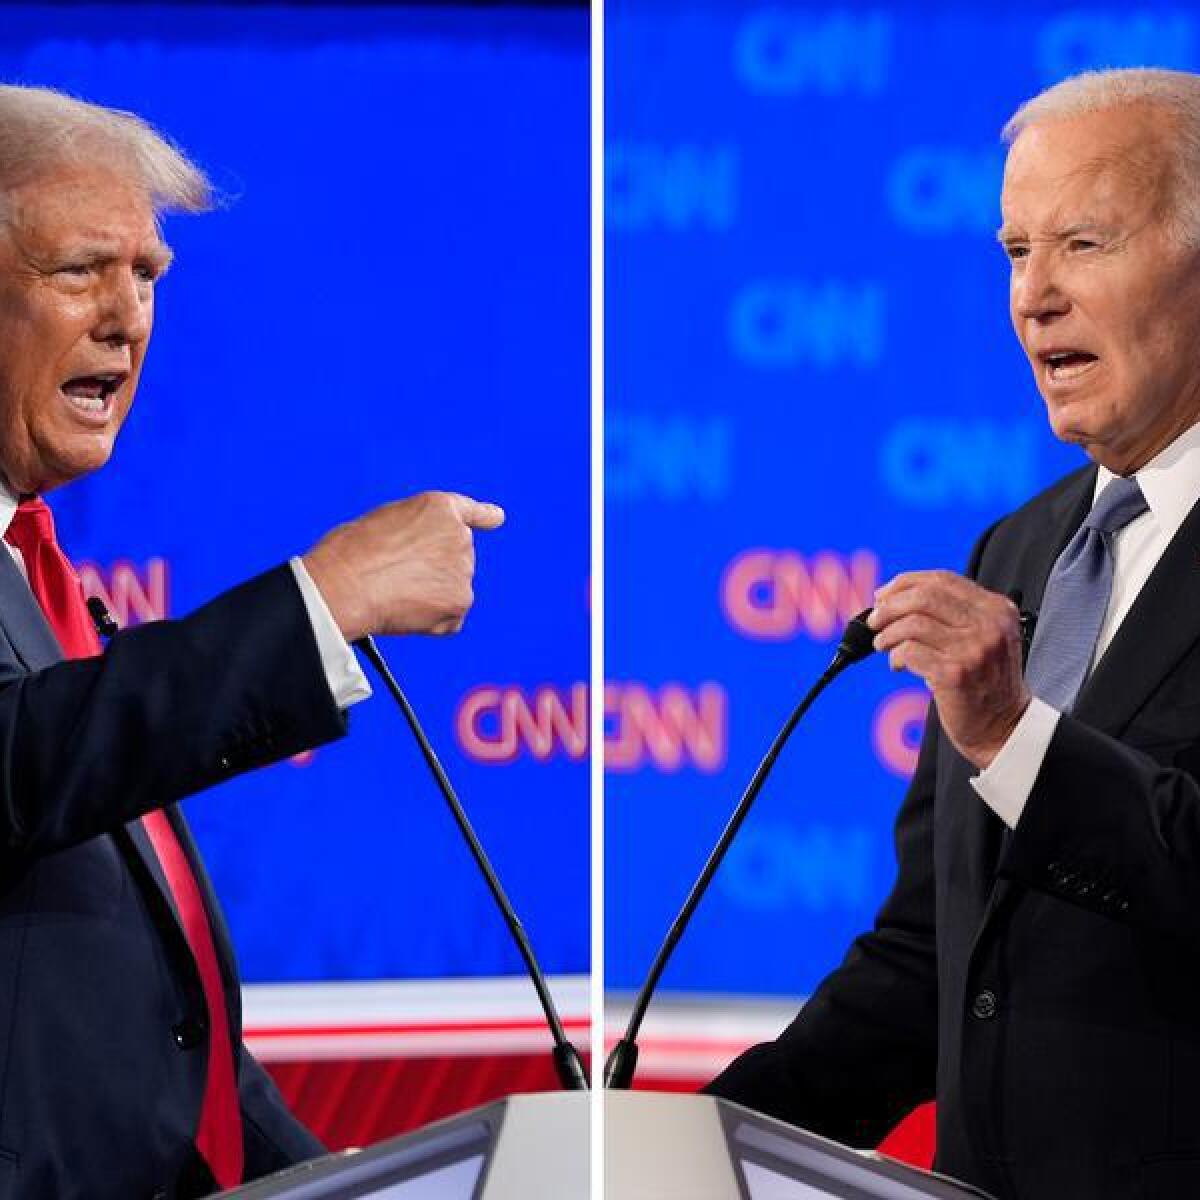 Donald Trump and President Joe Biden at the CNN debate in Atlanta